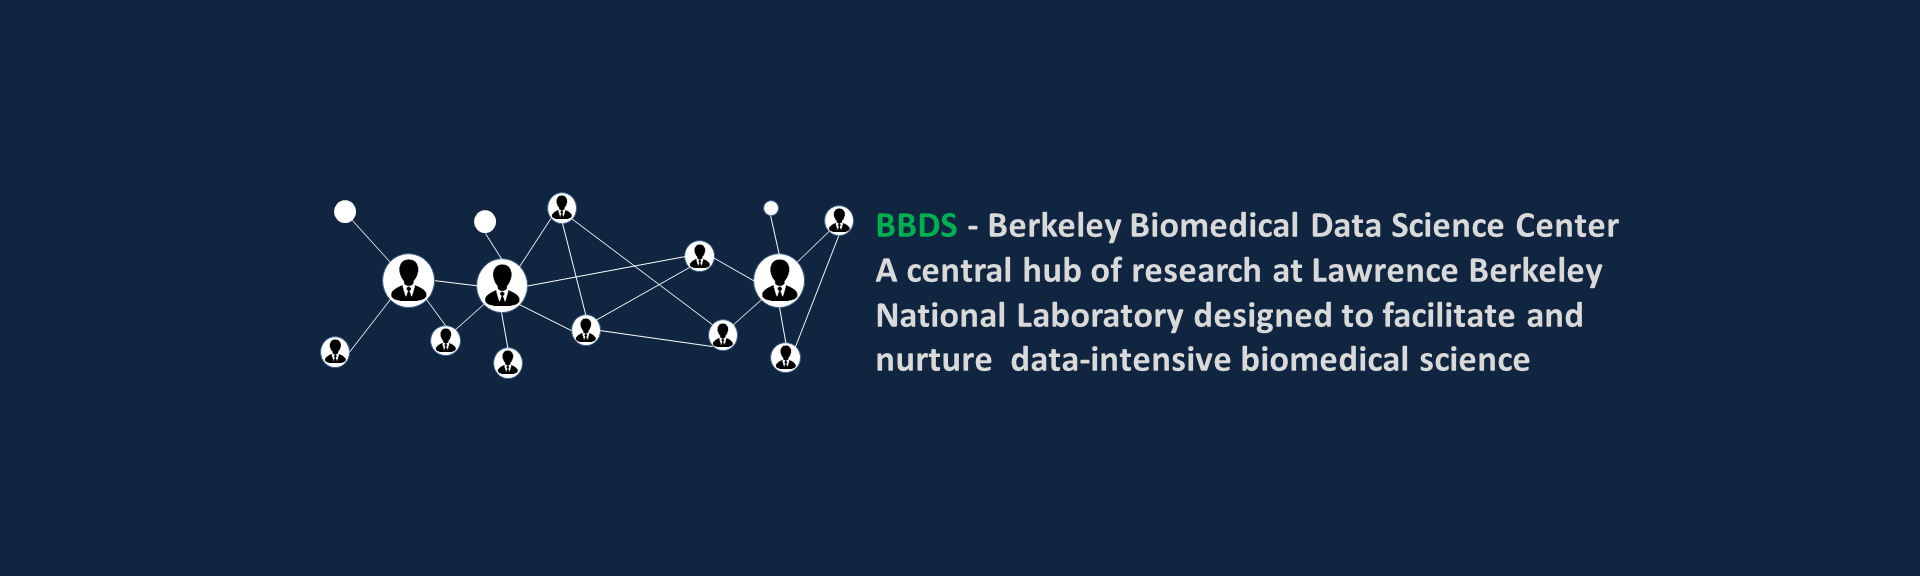 Berkeley Biomedical Data Science Center